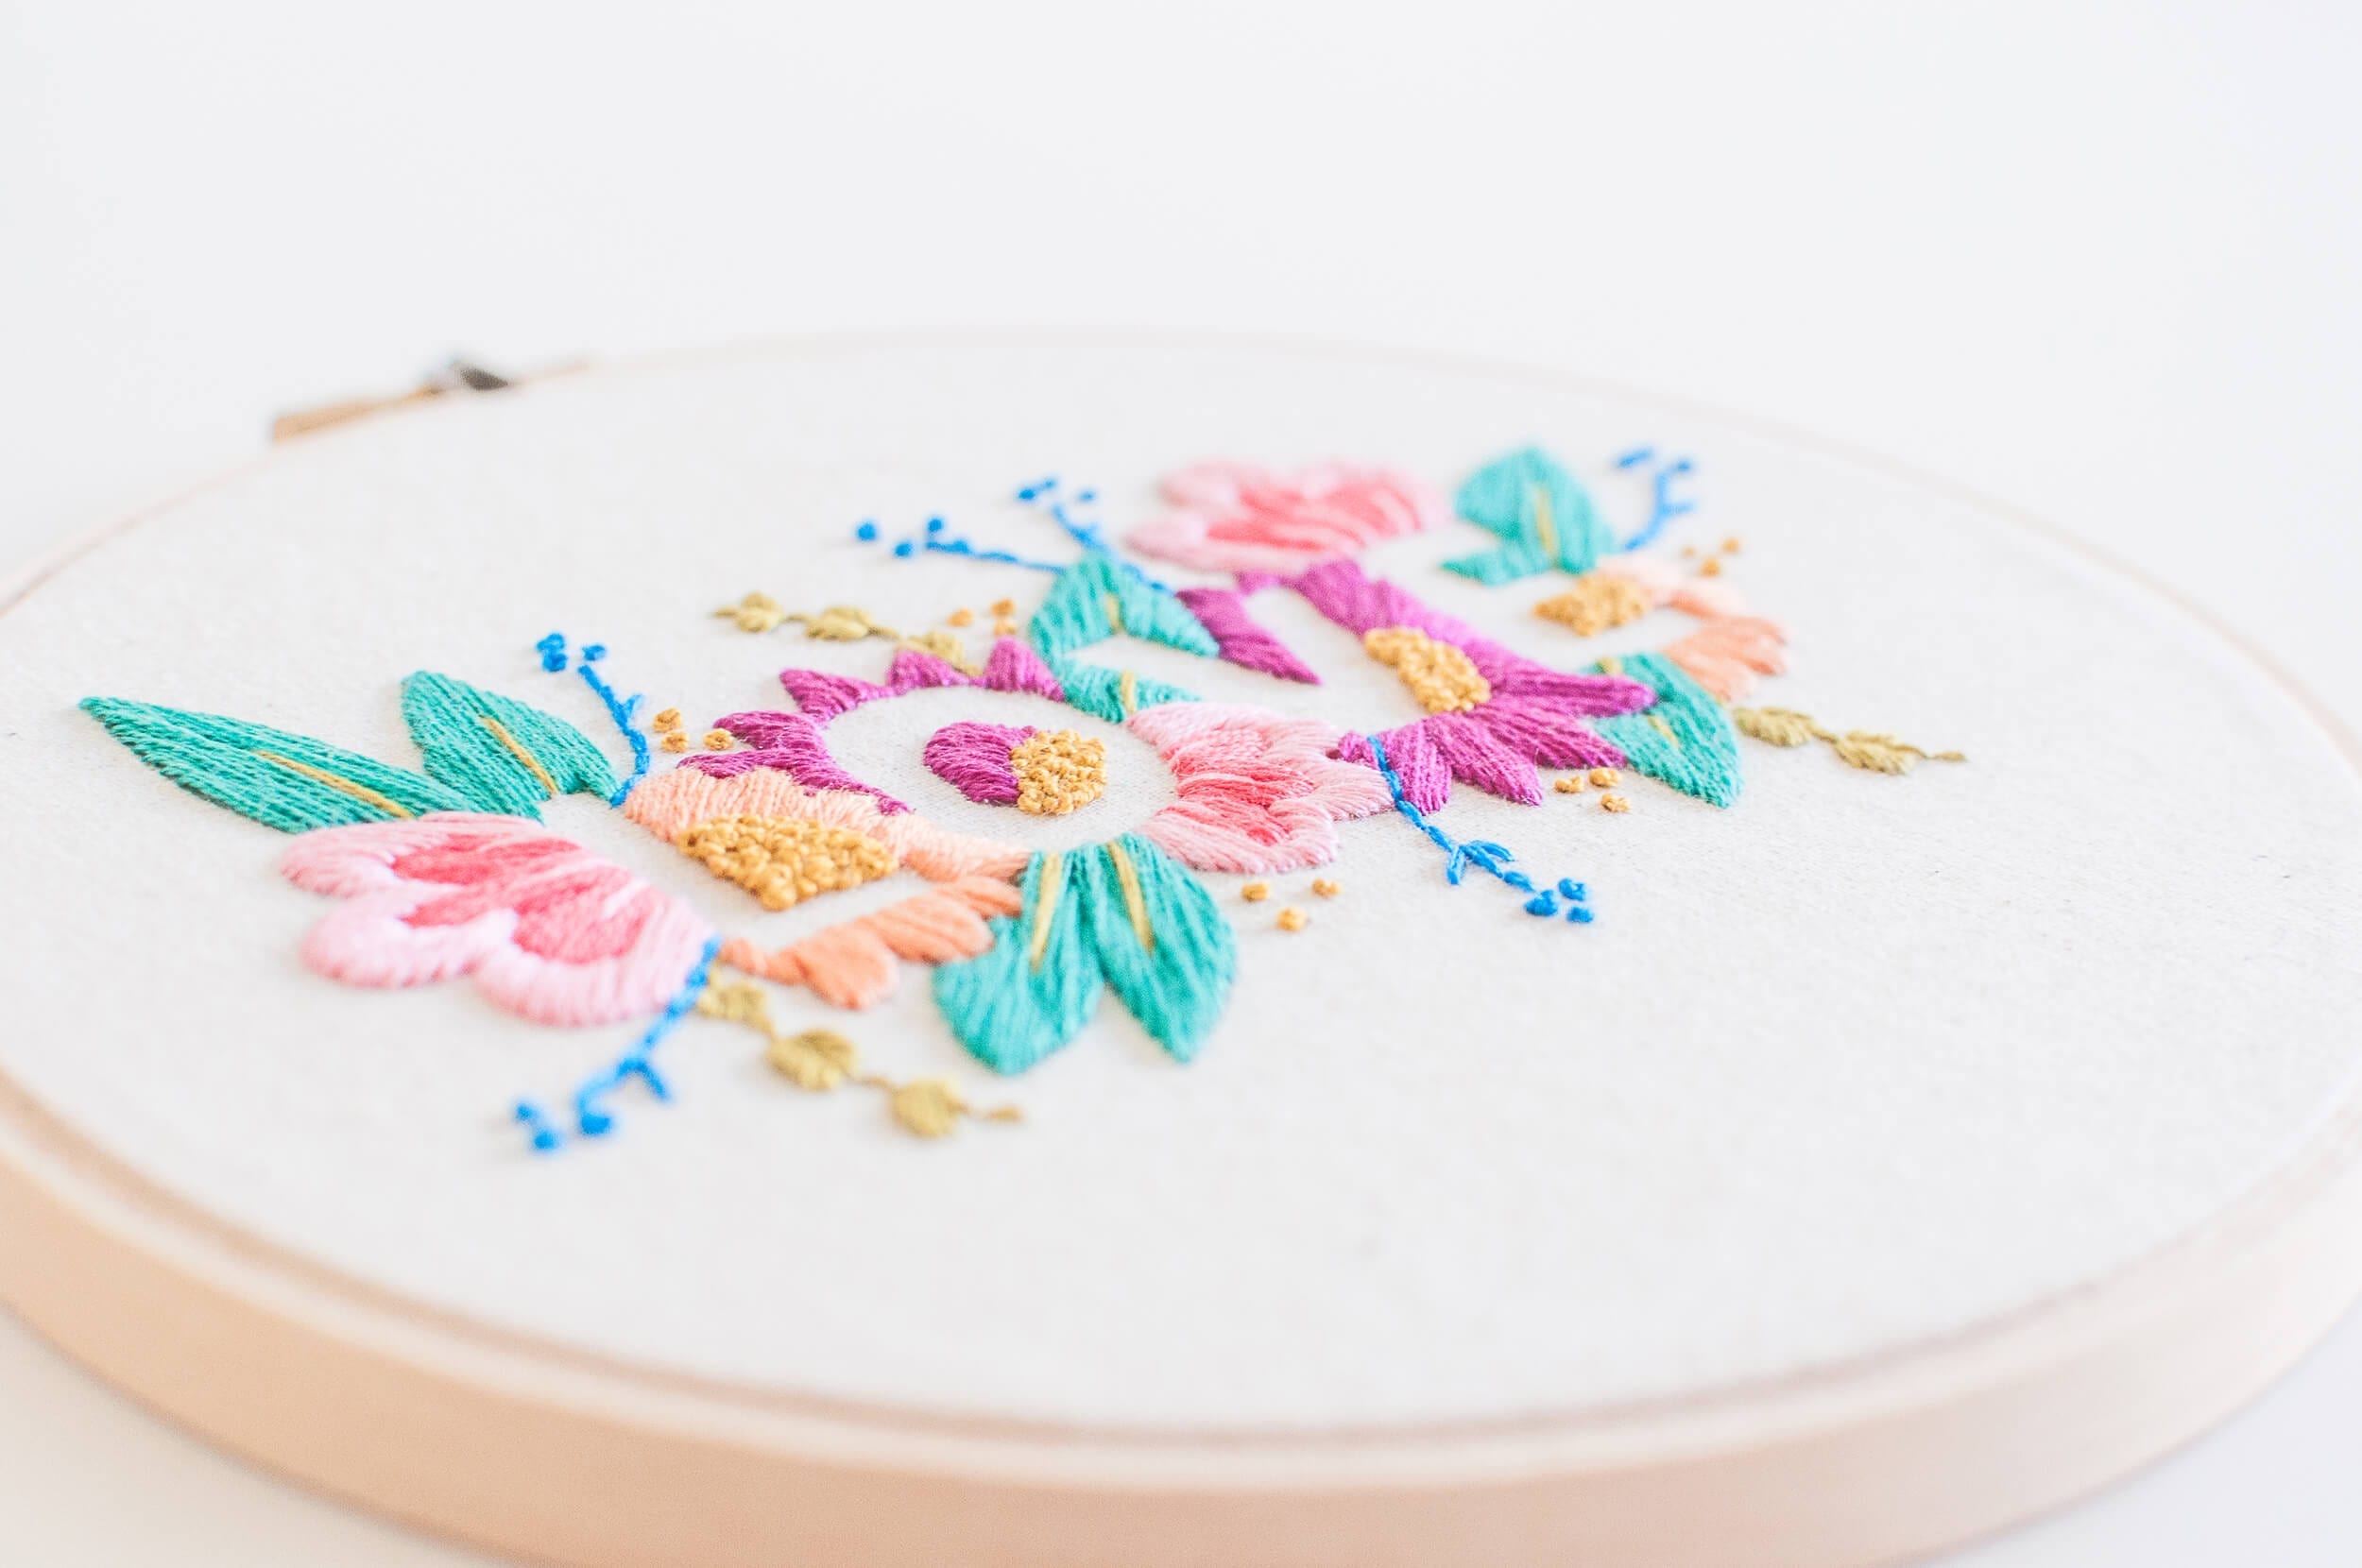 DMC Love embroidery kit